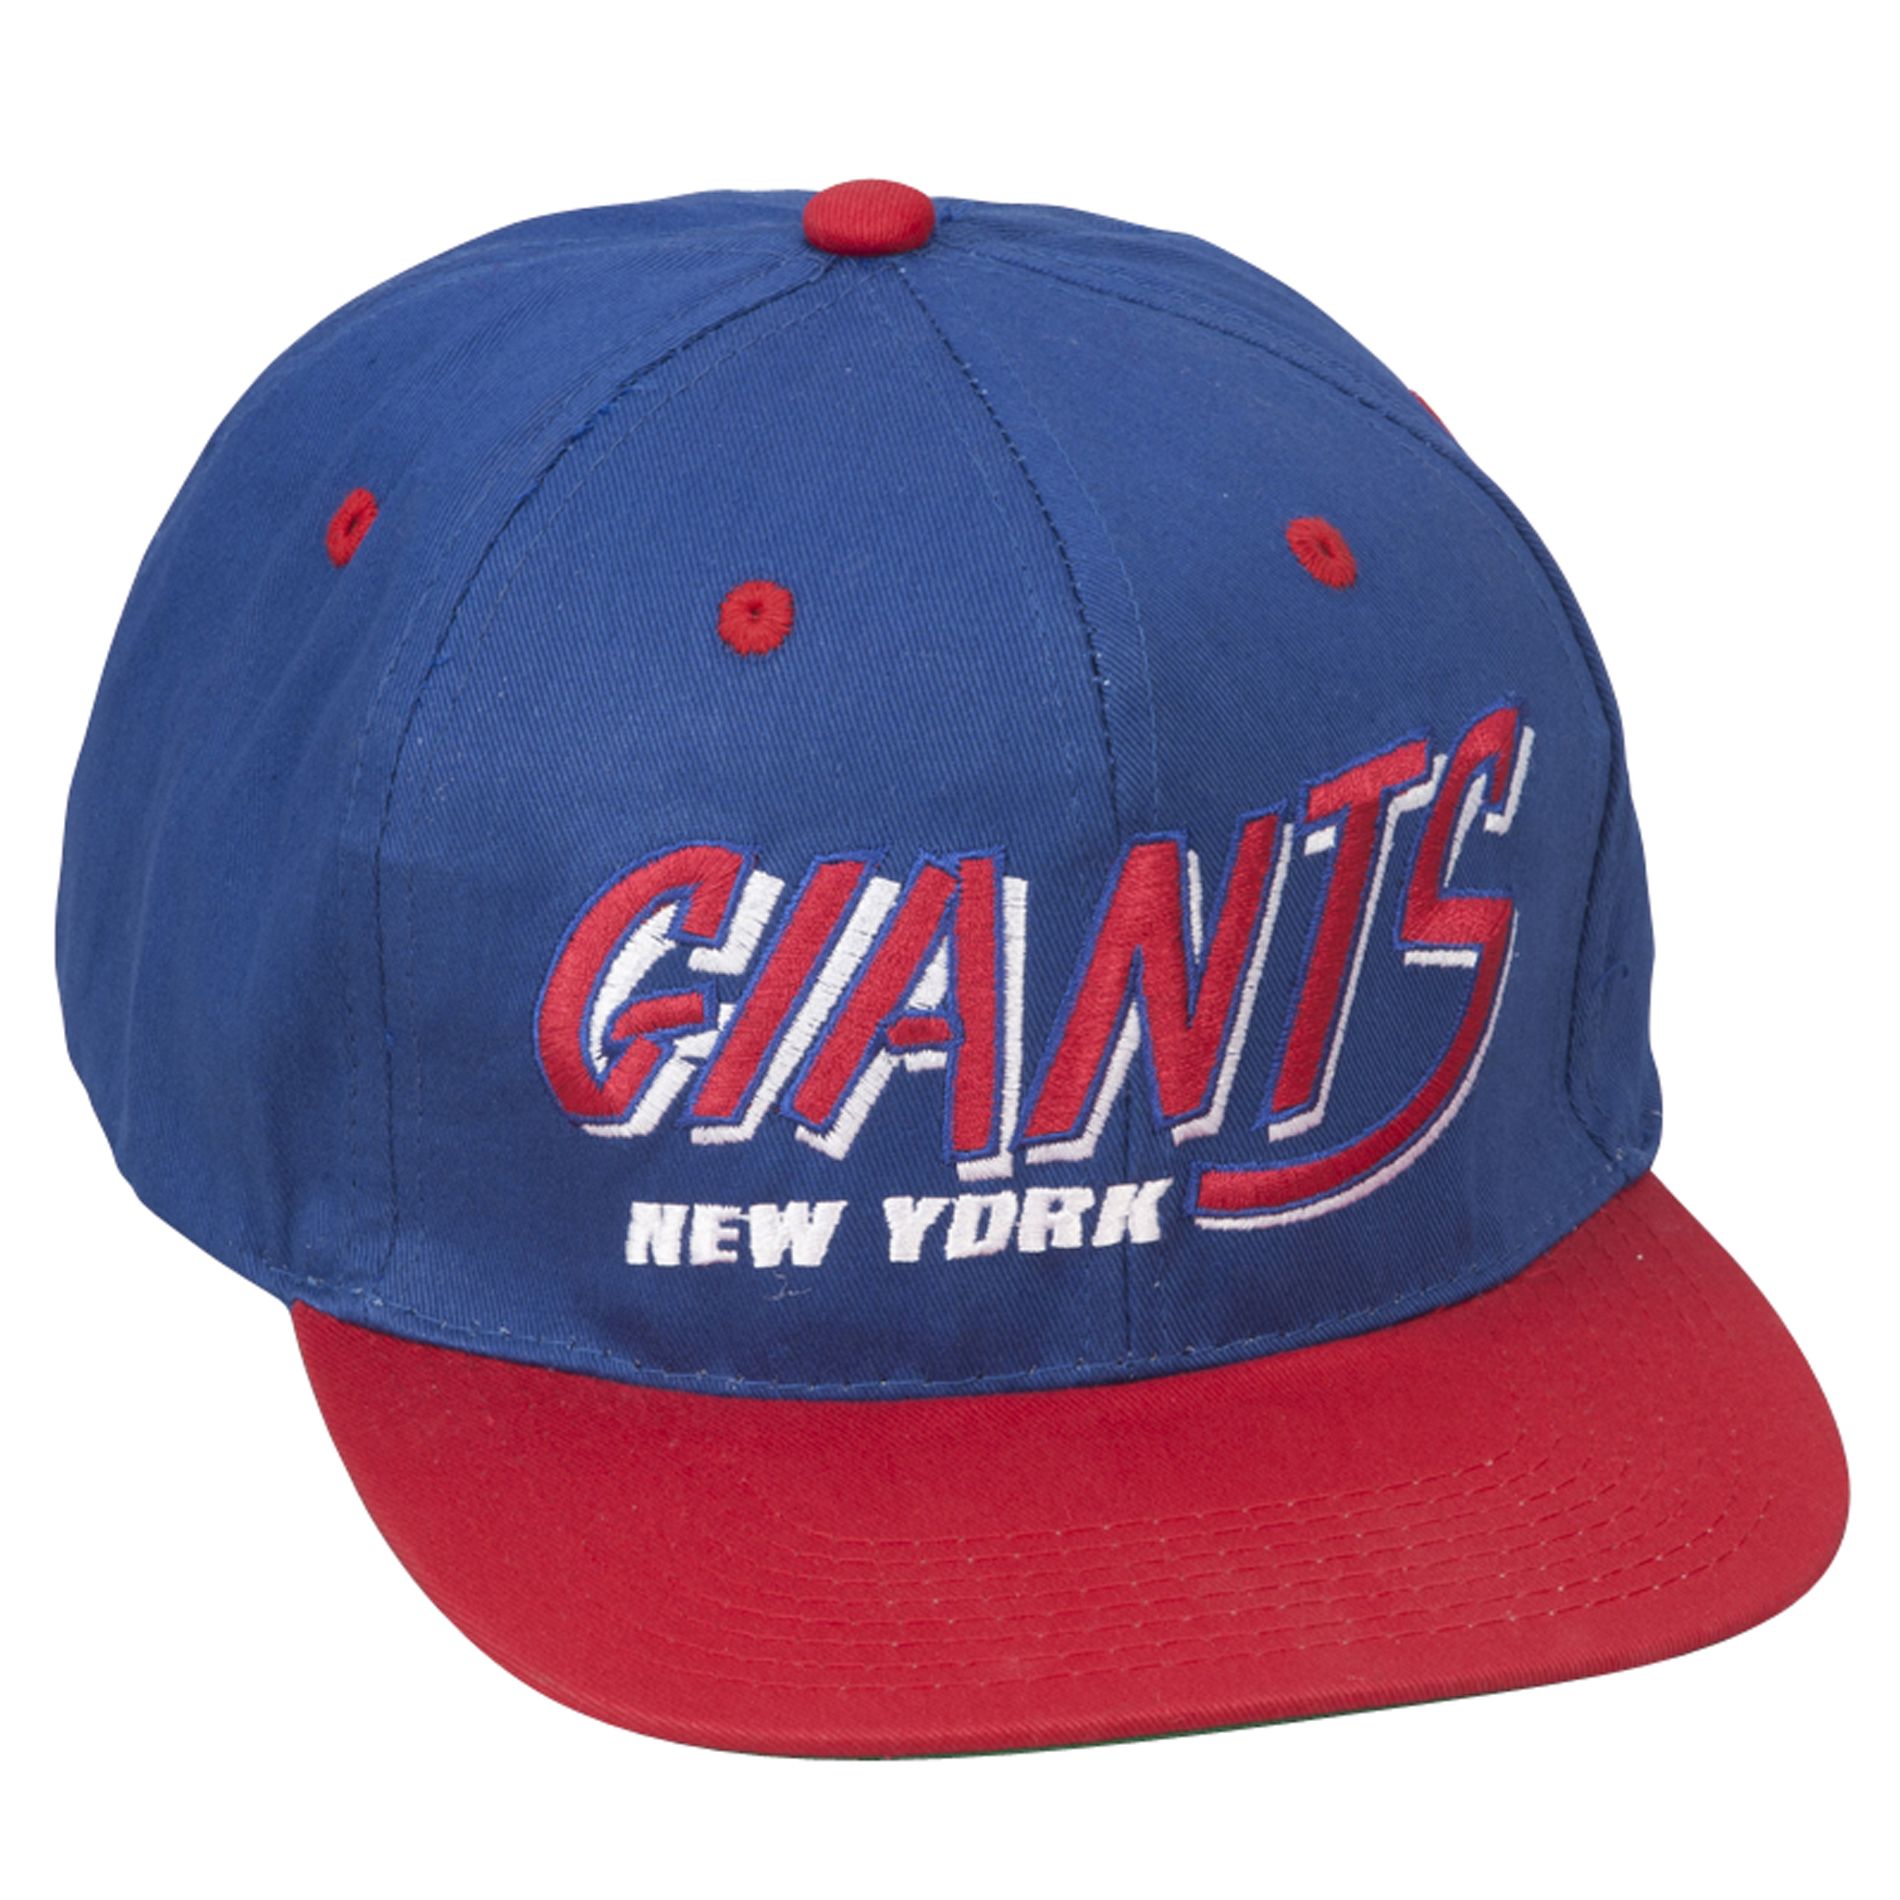 GIII New York Giants NFL Retro Snapback Hat